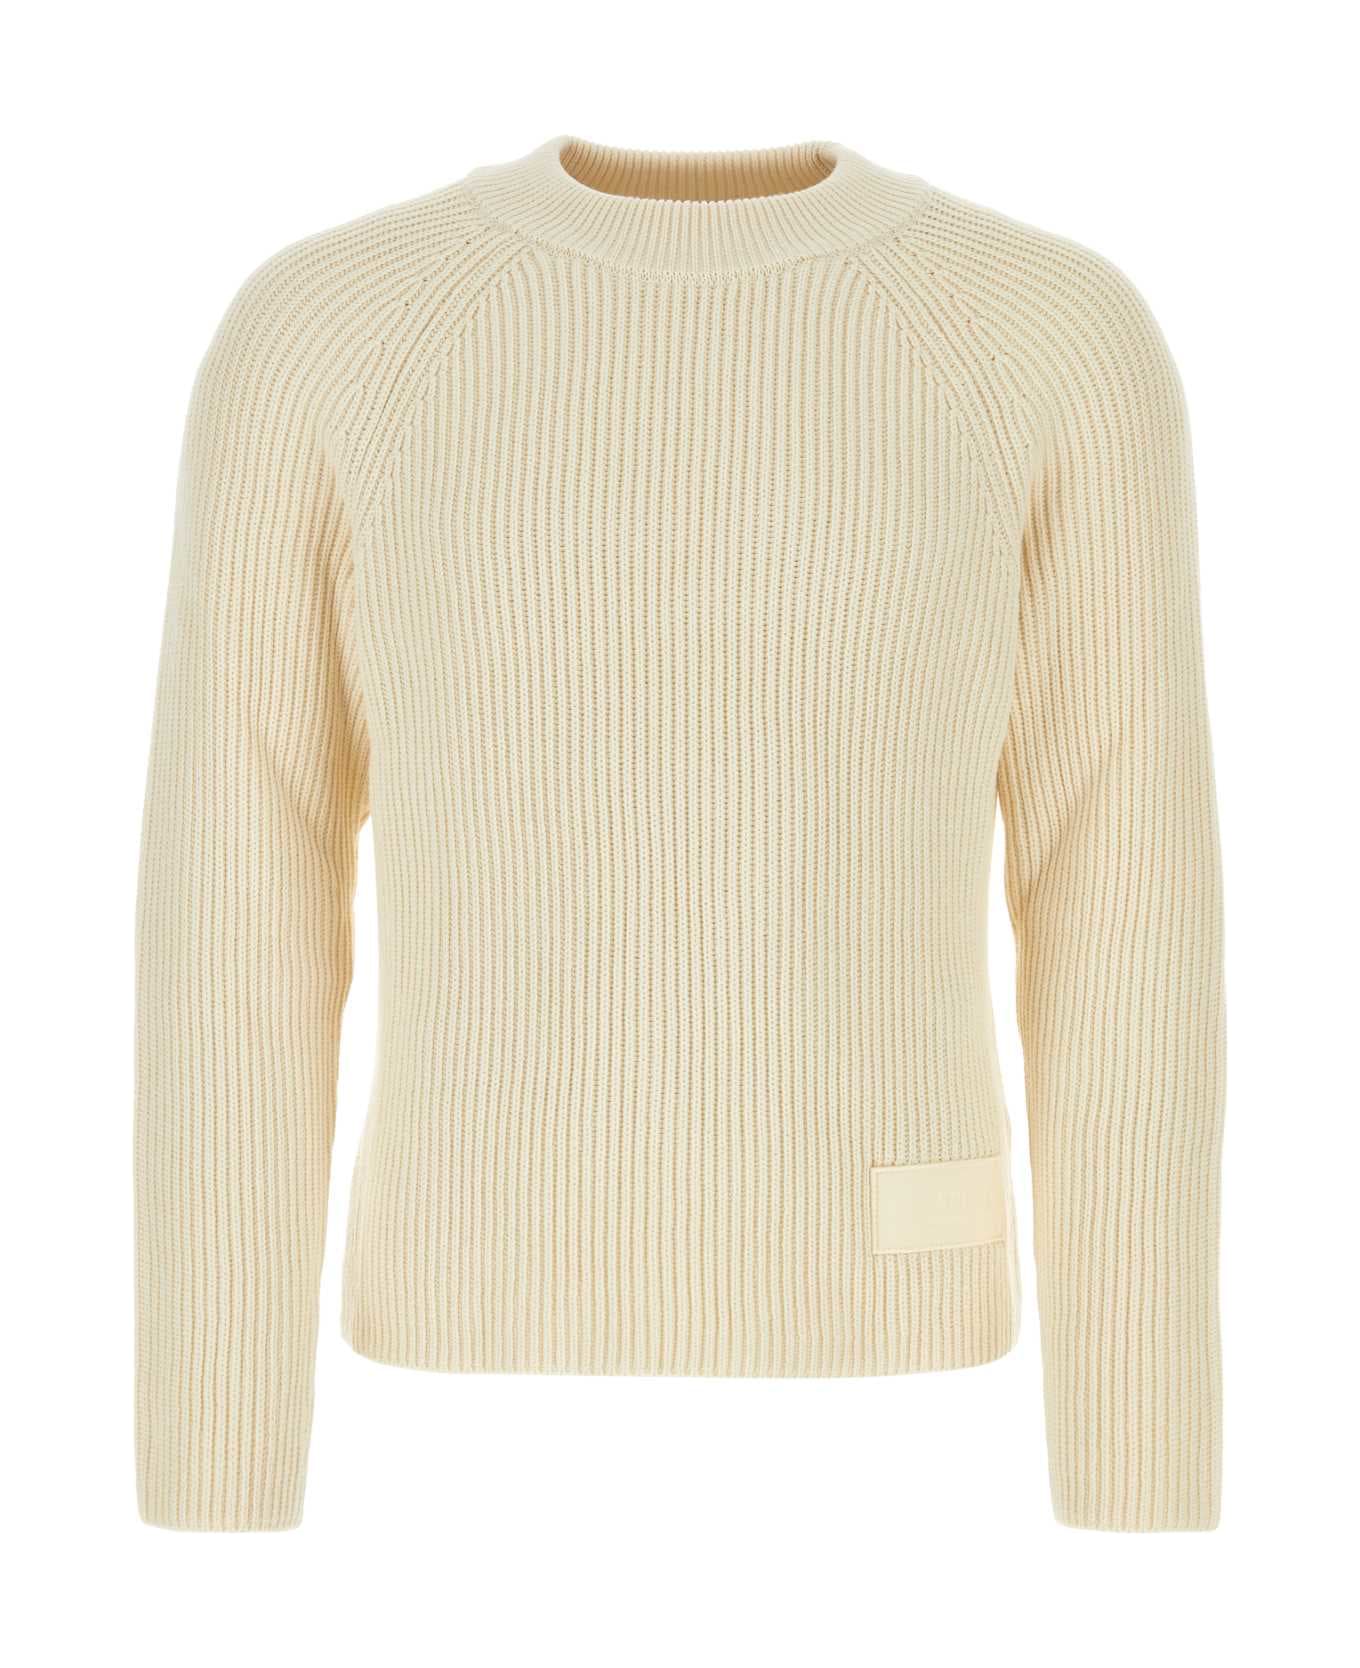 Ami Alexandre Mattiussi Ivory Cotton Blend Sweater - IVORY ニットウェア